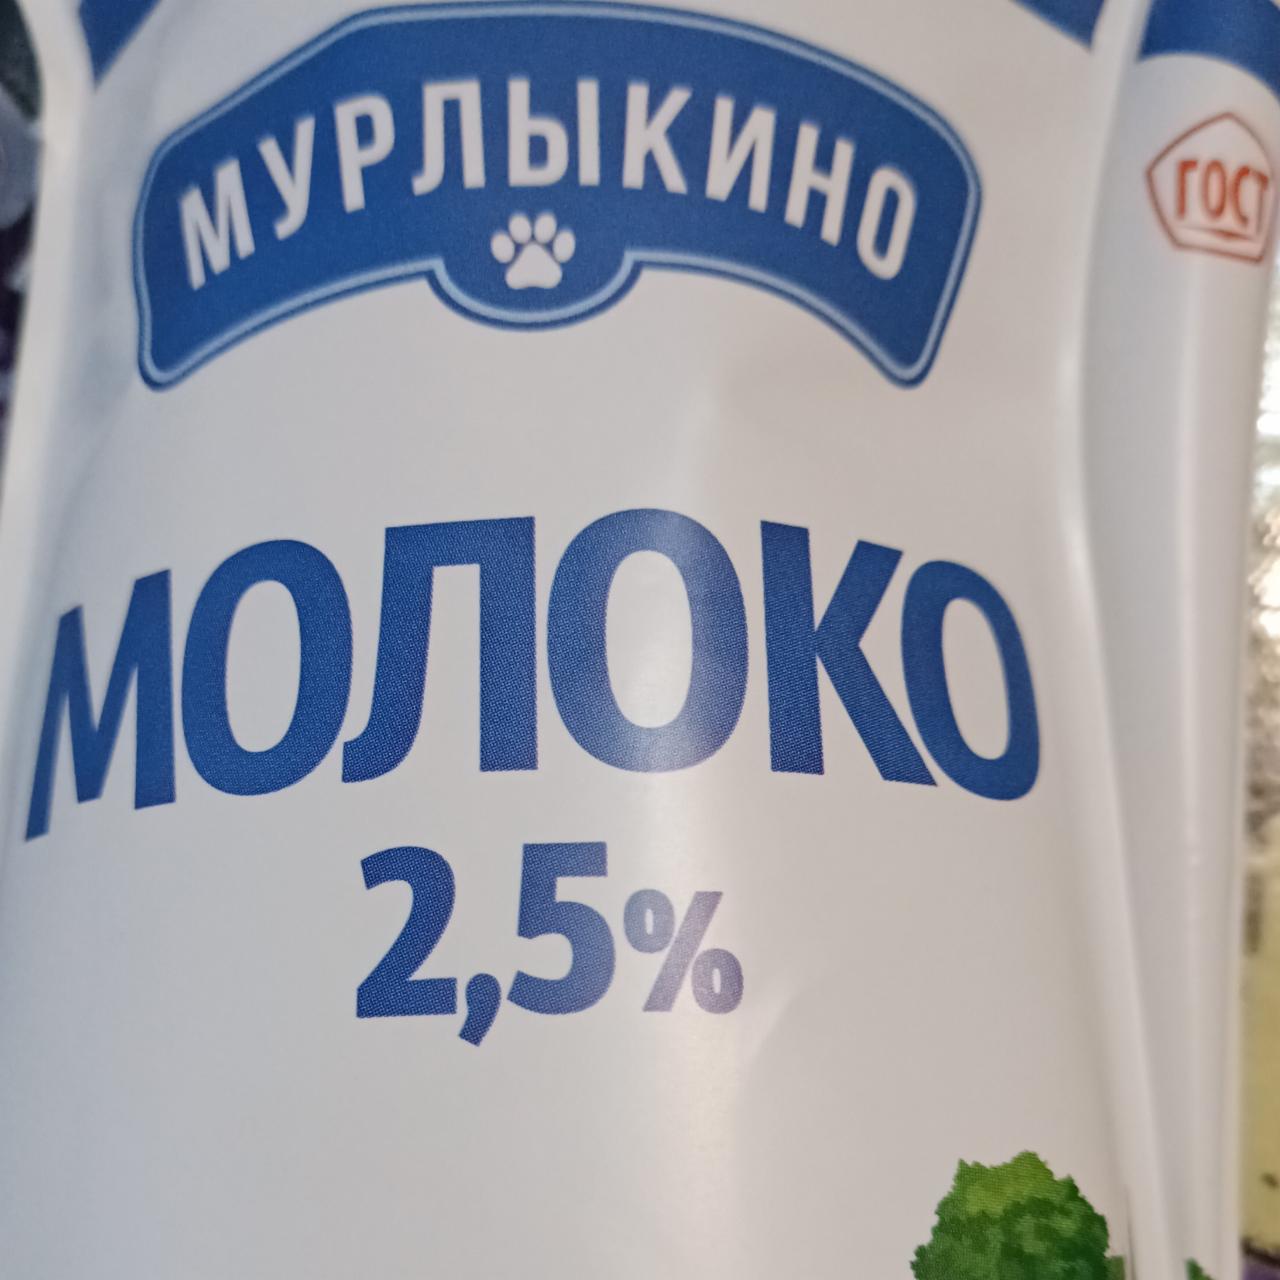 Фото - Молоко 2.5% Мурлыкино Саратовский молочный комбинат